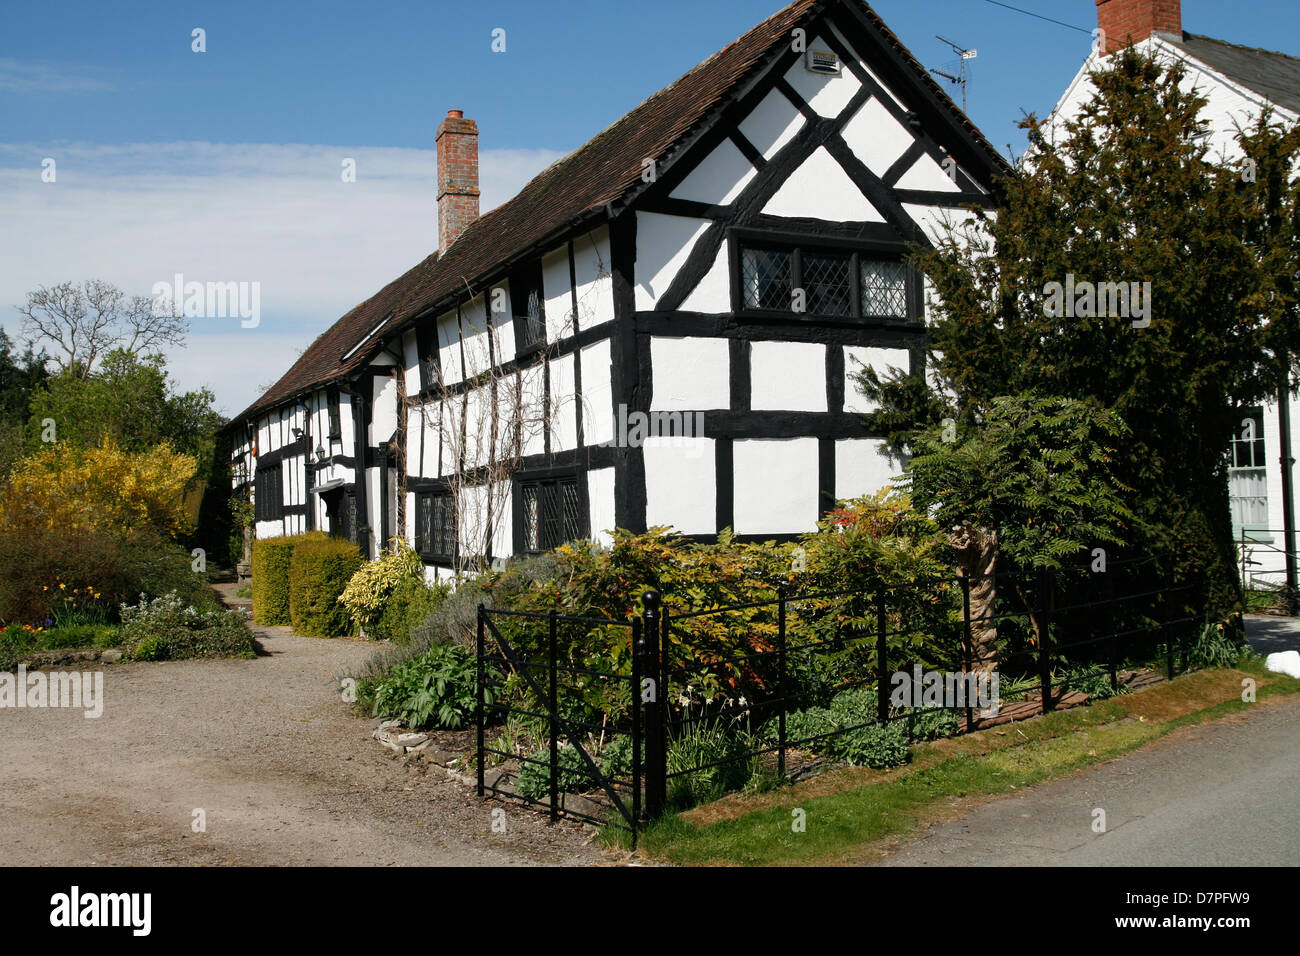 Timber framed houses Black and White Village Trail Eardisland Herefordshire England UK Stock Photo